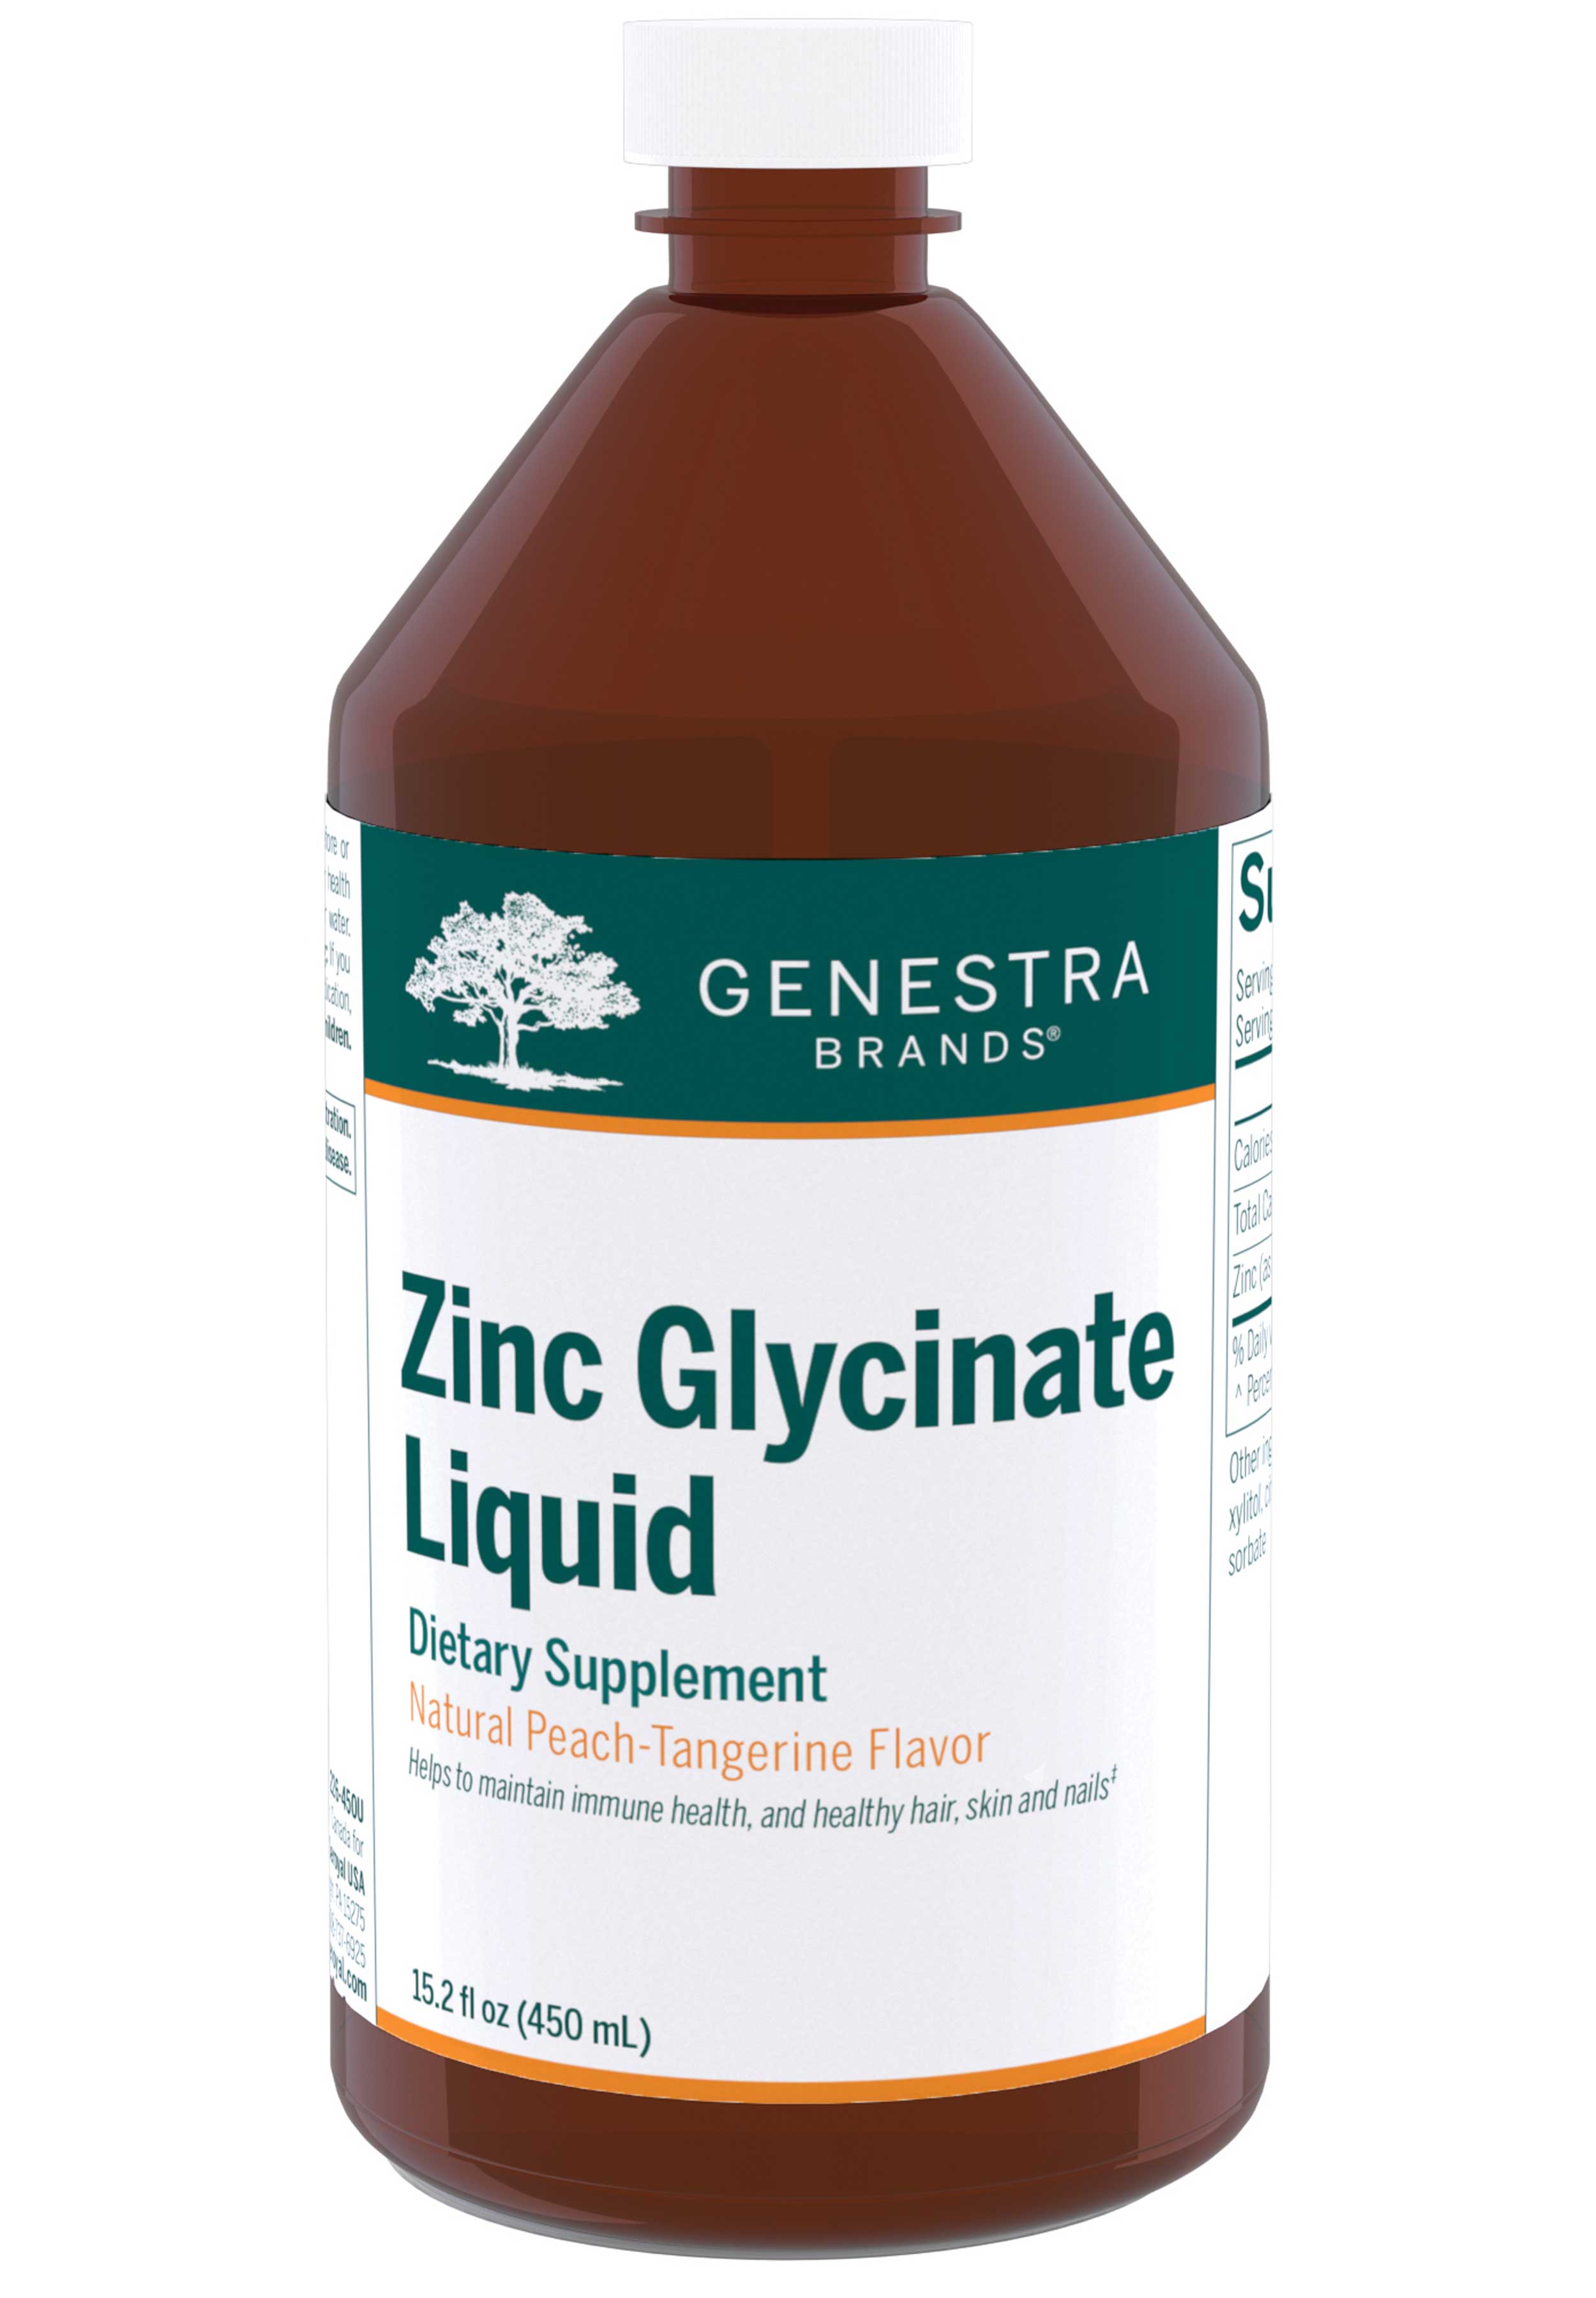 Genestra Brands Zinc Glycinate Liquid